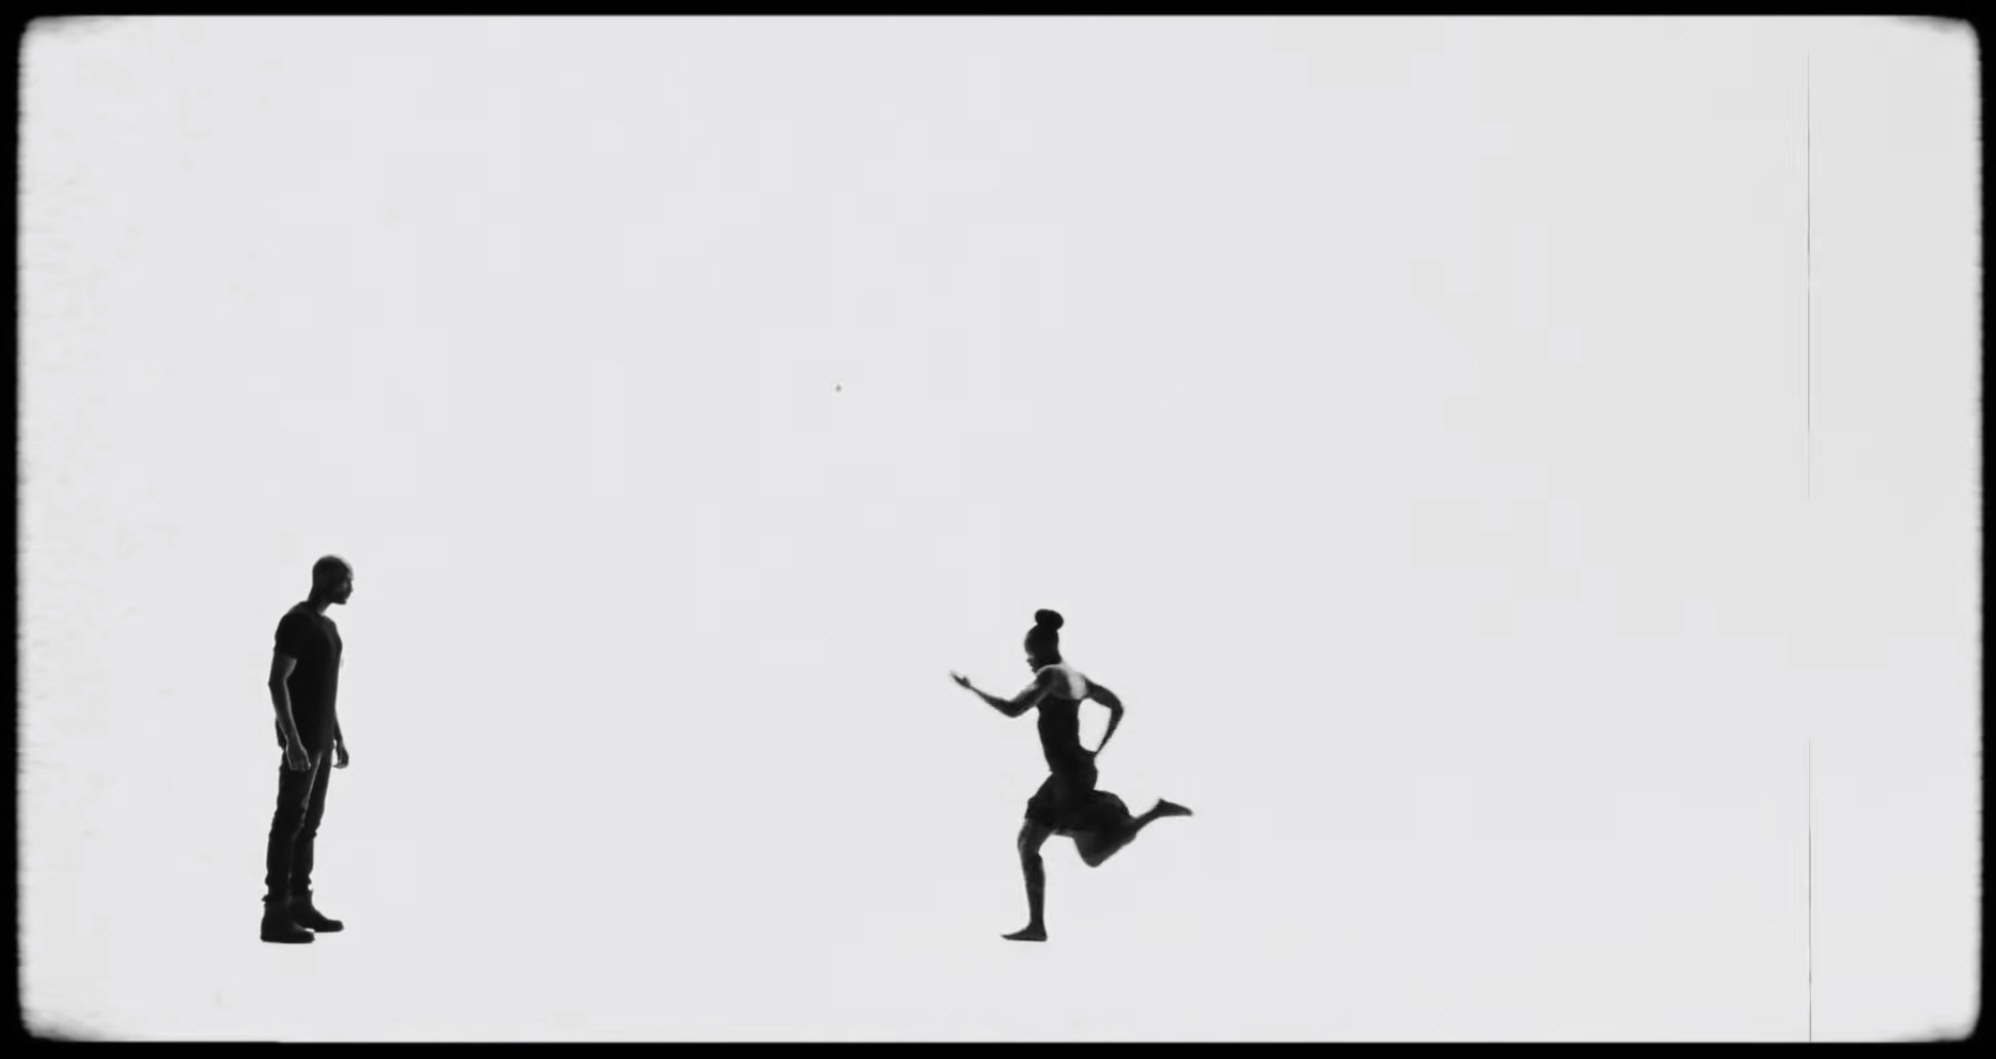 A woman running toward a man against a blank background